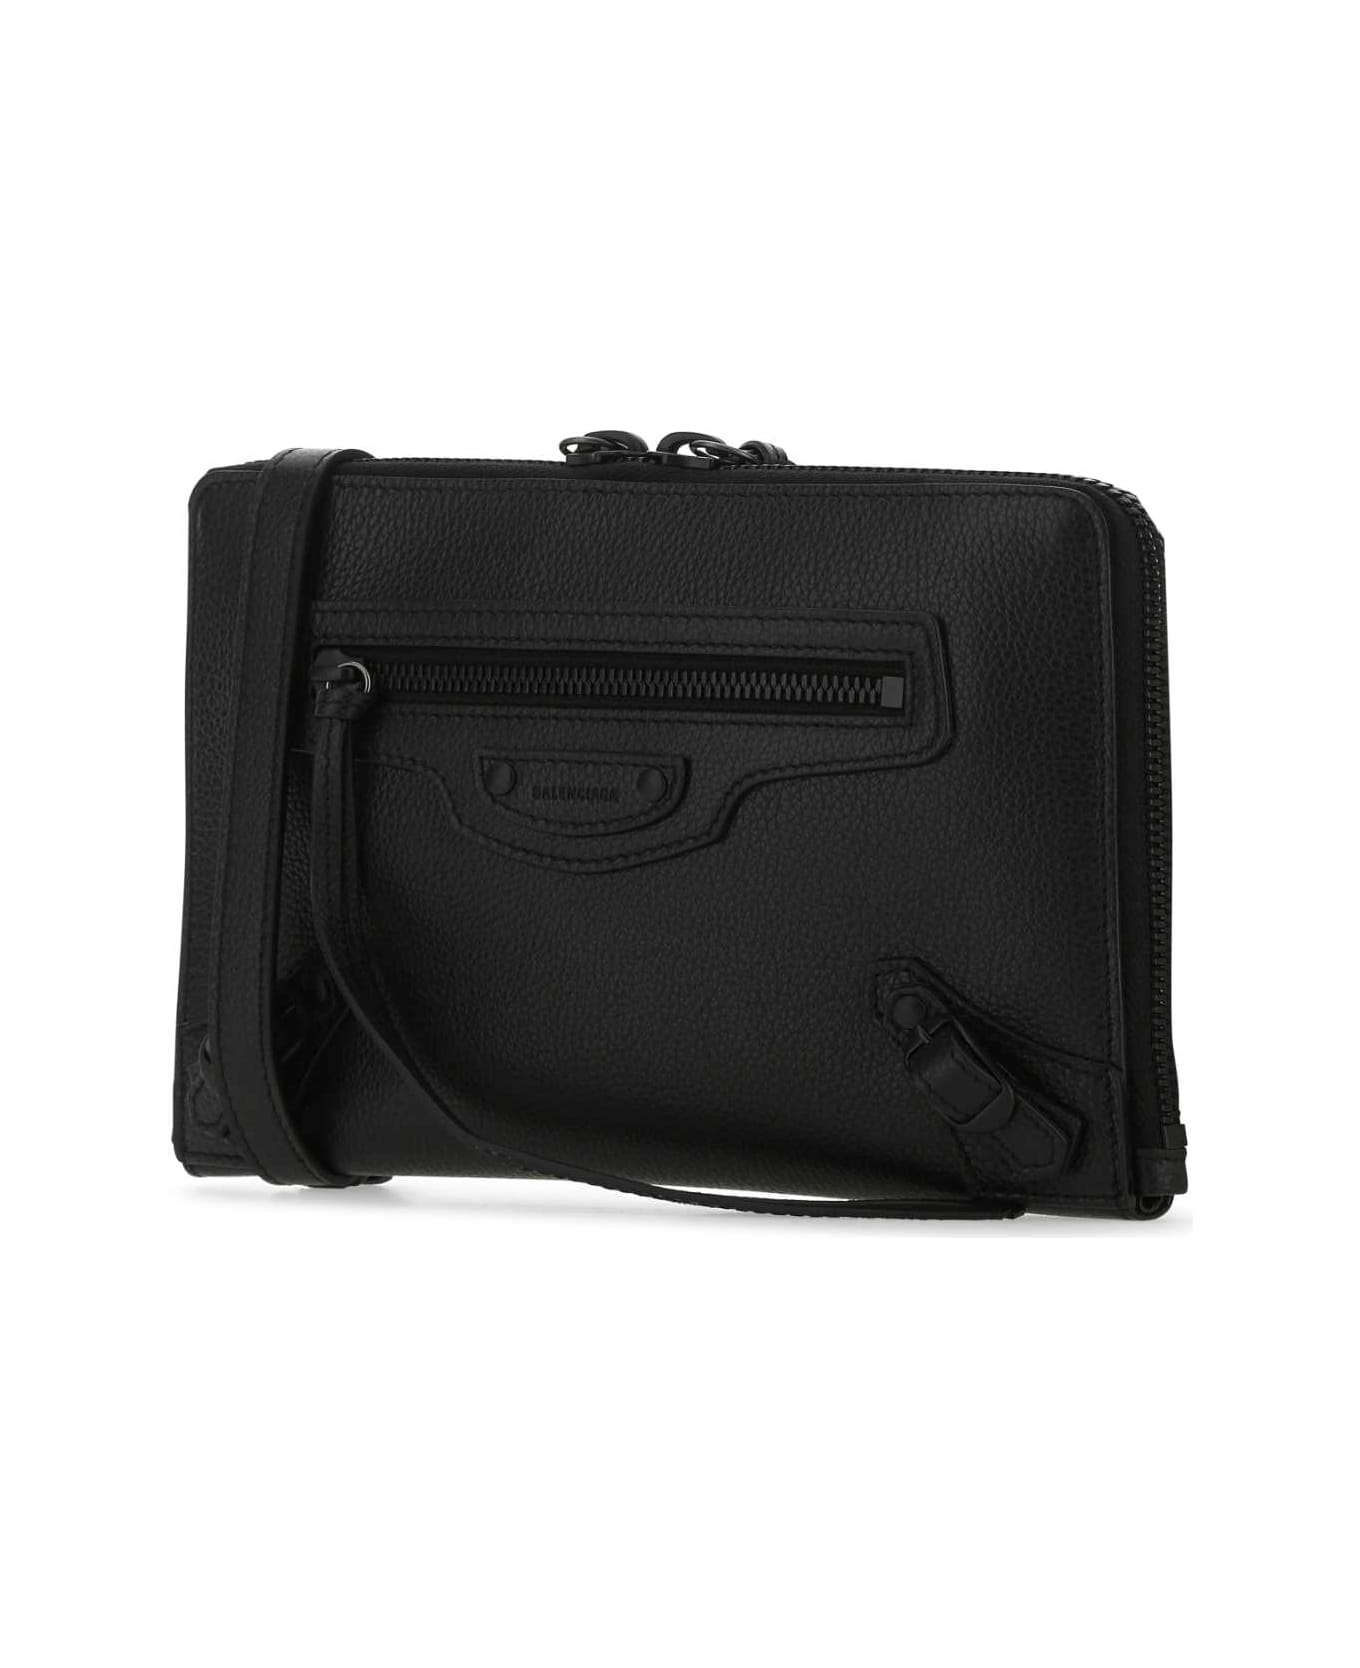 Balenciaga Black Leather Neo Classic S Pouch - 1000 クラッチバッグ